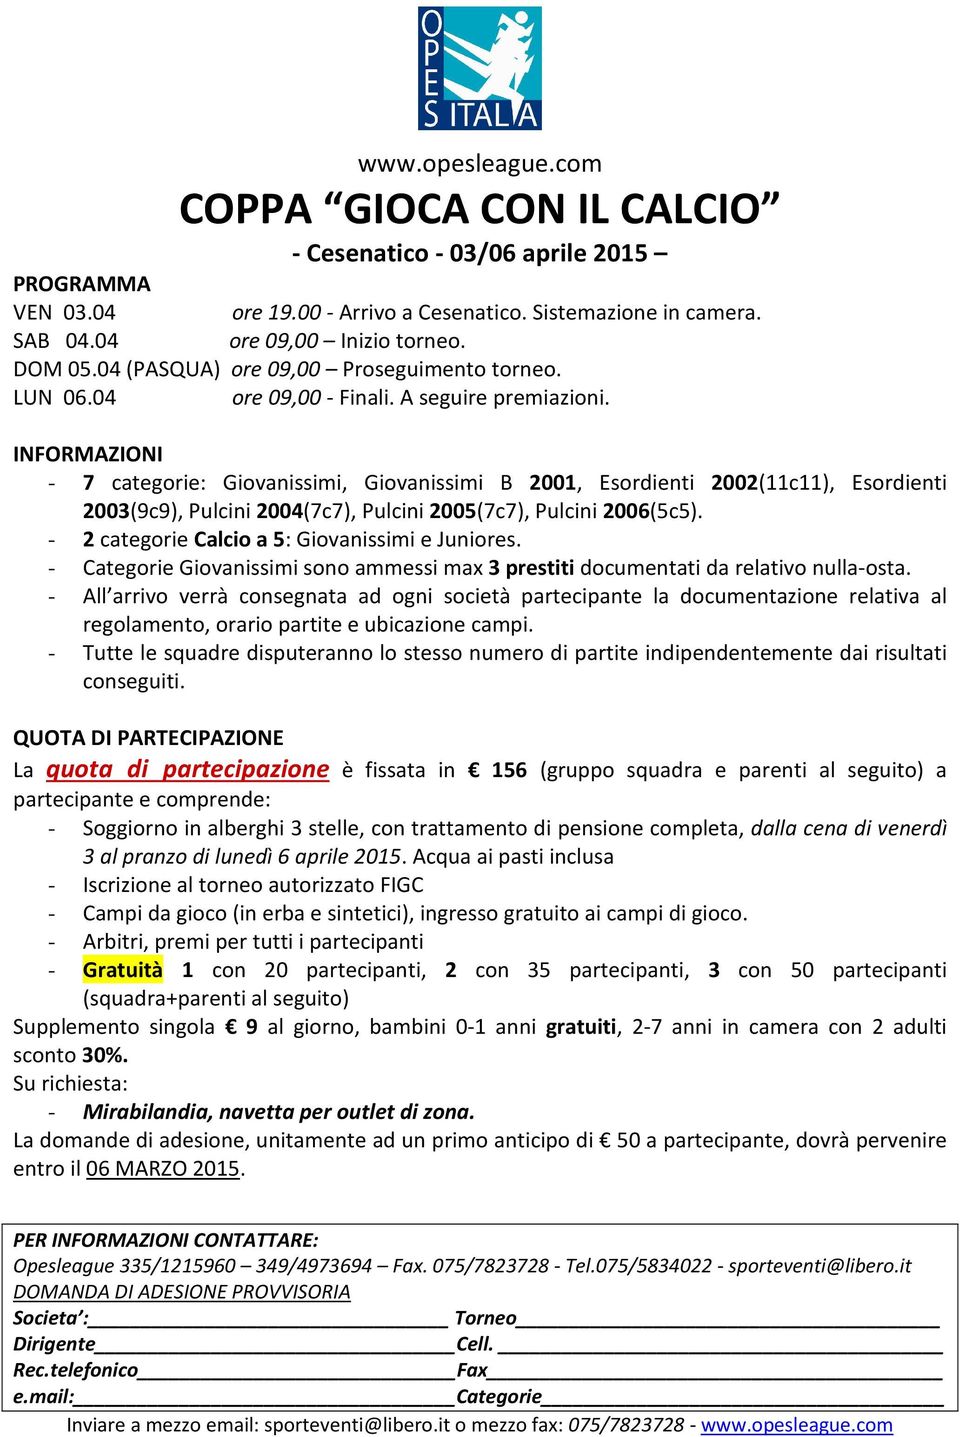 - 7 categorie: Giovanissimi, Giovanissimi B 2001, Esordienti 2002(11c11), Esordienti 2003(9c9), Pulcini 2004(7c7), Pulcini 2005(7c7), Pulcini 2006(5c5).